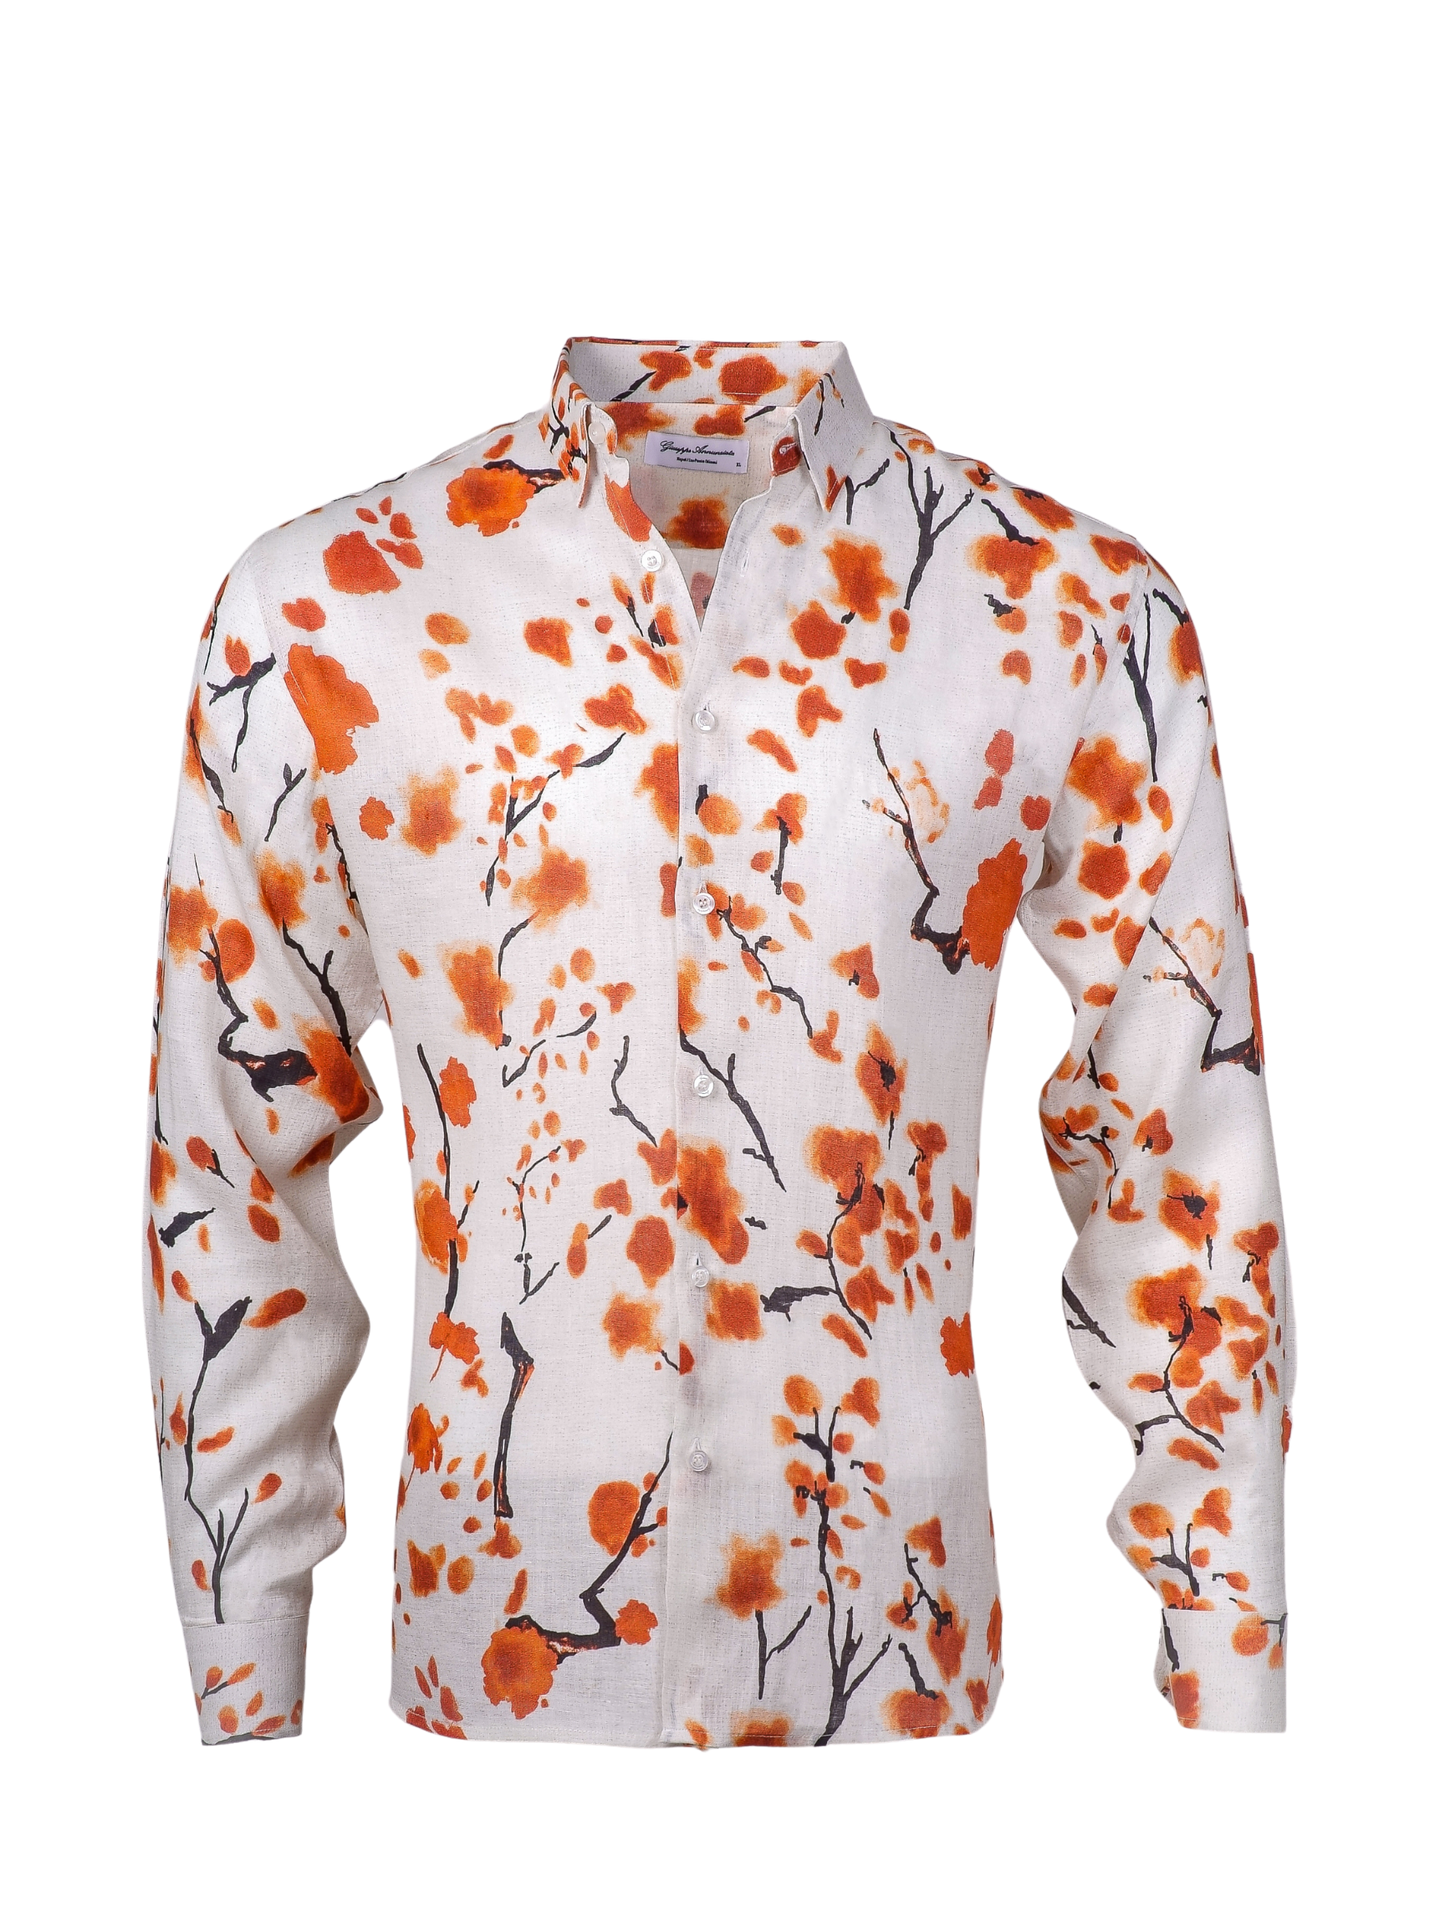 Printed Linen Shirt Cherry Blossom Orange